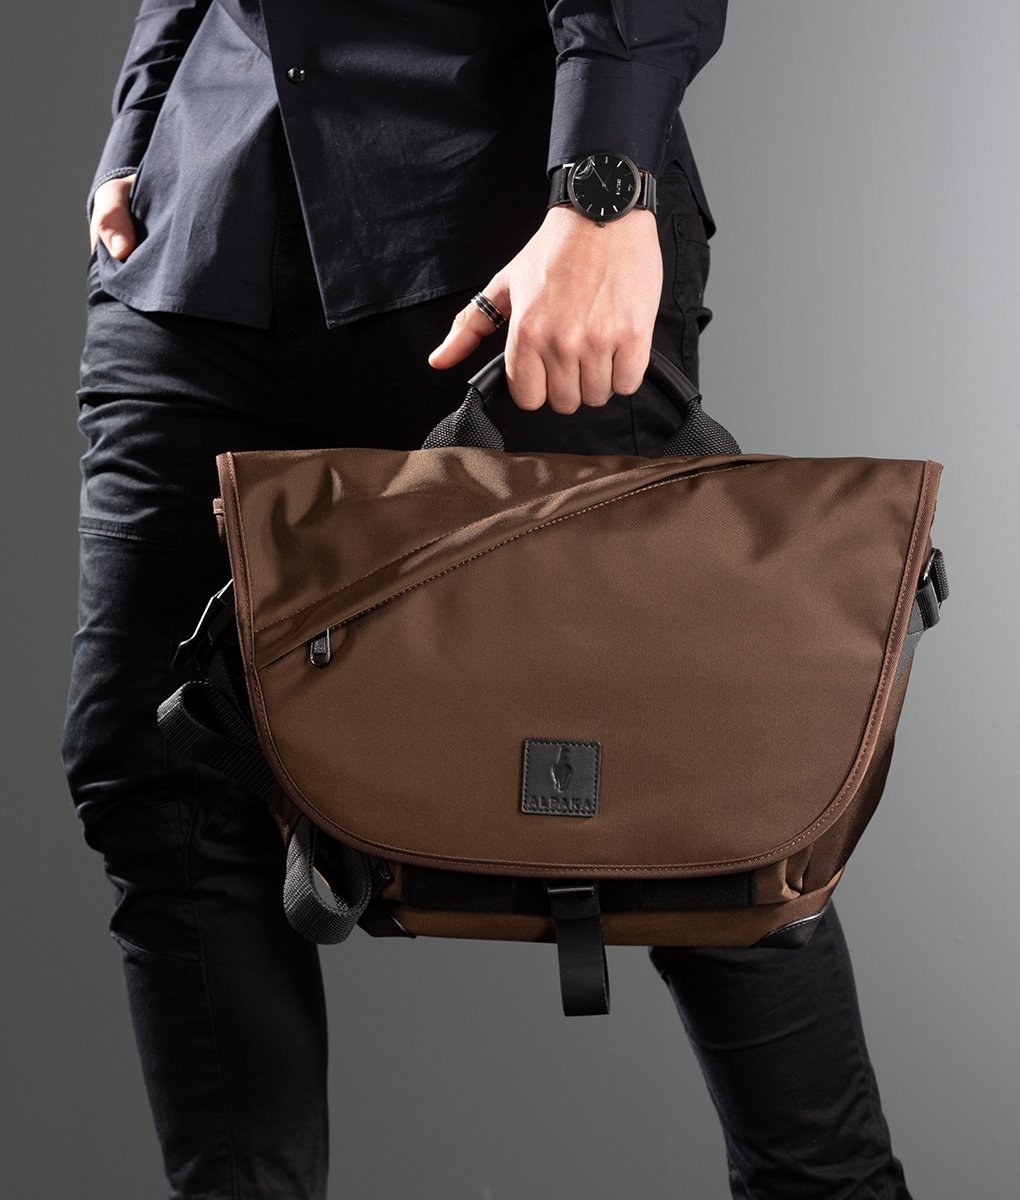 Order Of The Peaky Blinders Waterproof Leather Folded Messenger Nylon Bag Travel Tote Hopping Folding School Handbags